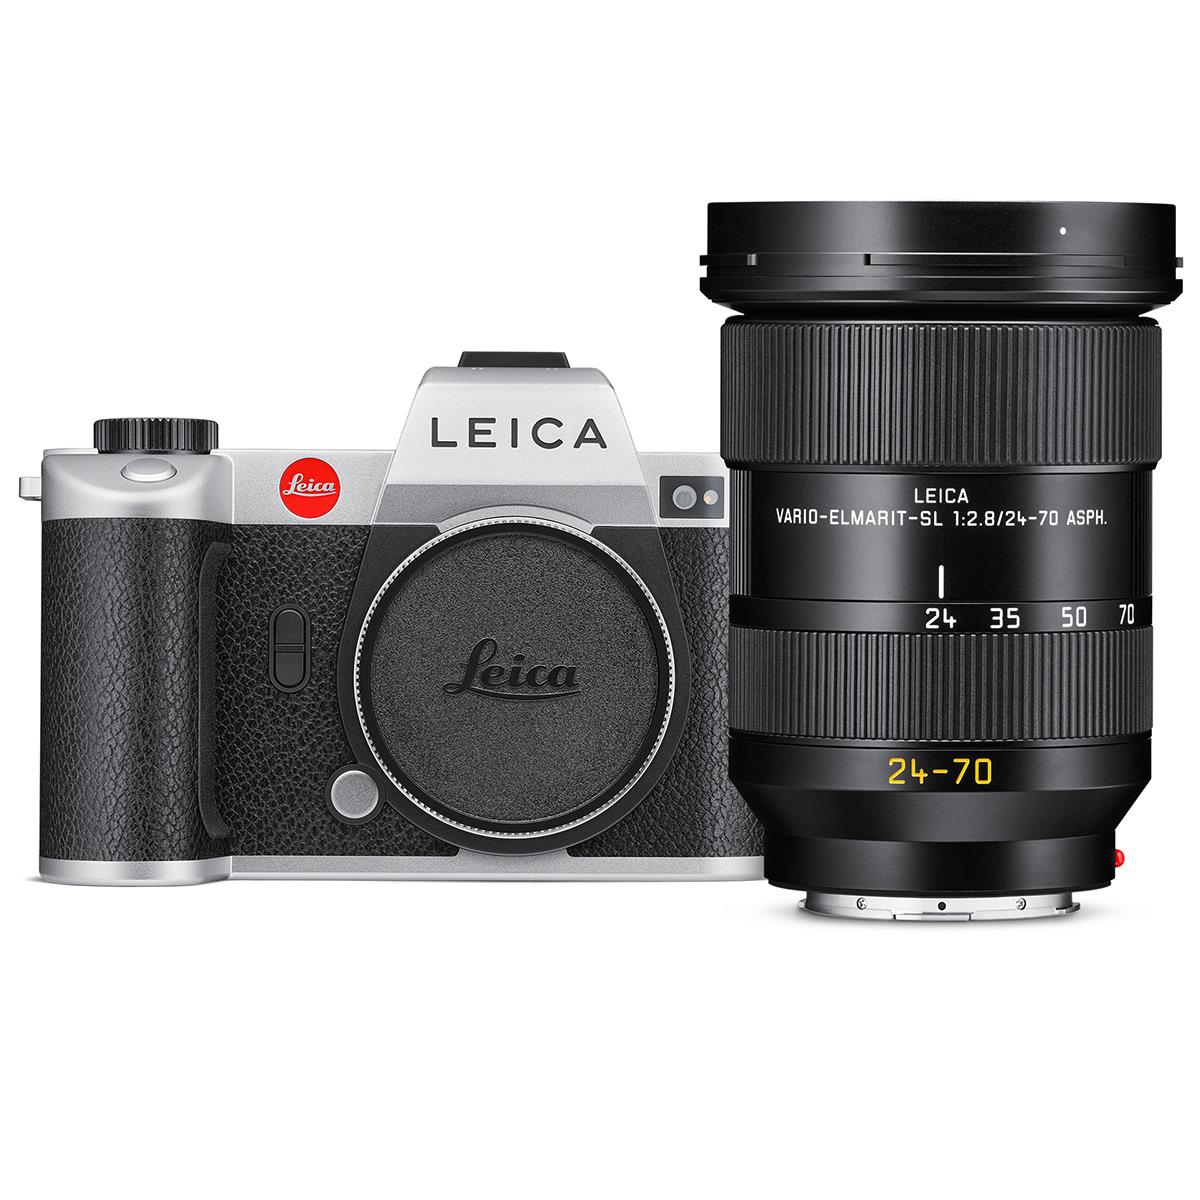 Leica SL2 Mirrorless Digital Camera (Silver) with 24-70mm f/2.8 Lens